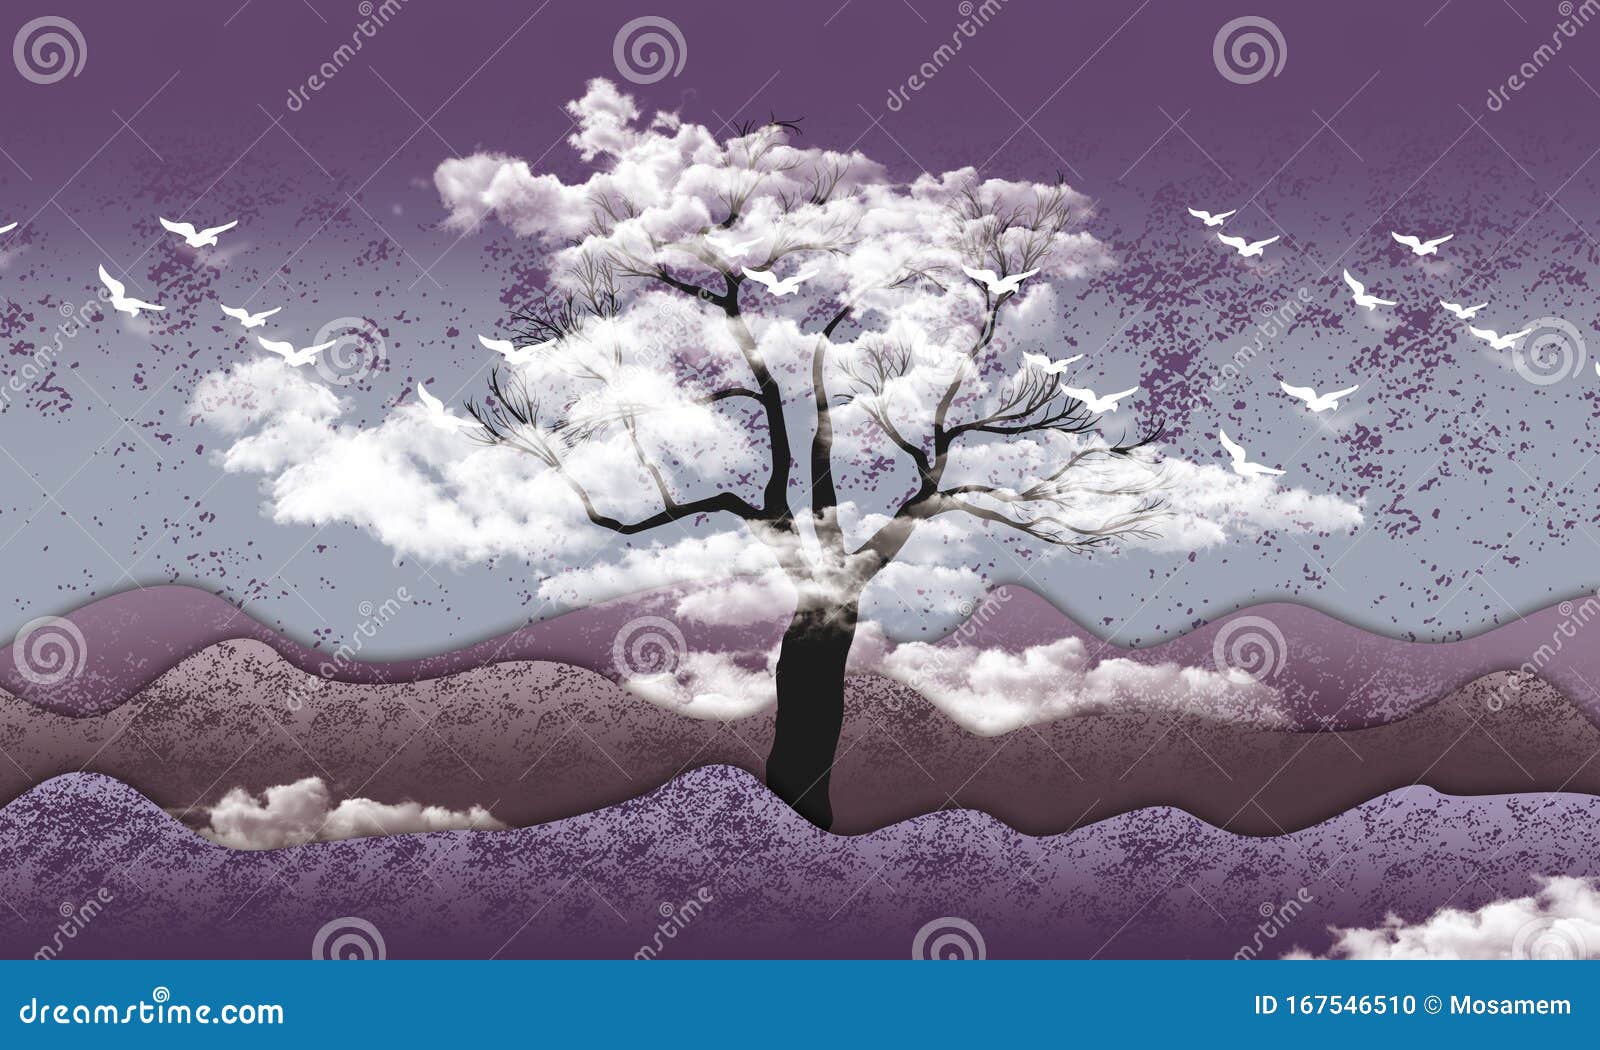 Wallpaper Tree Sky 3d Hd Image Num 22